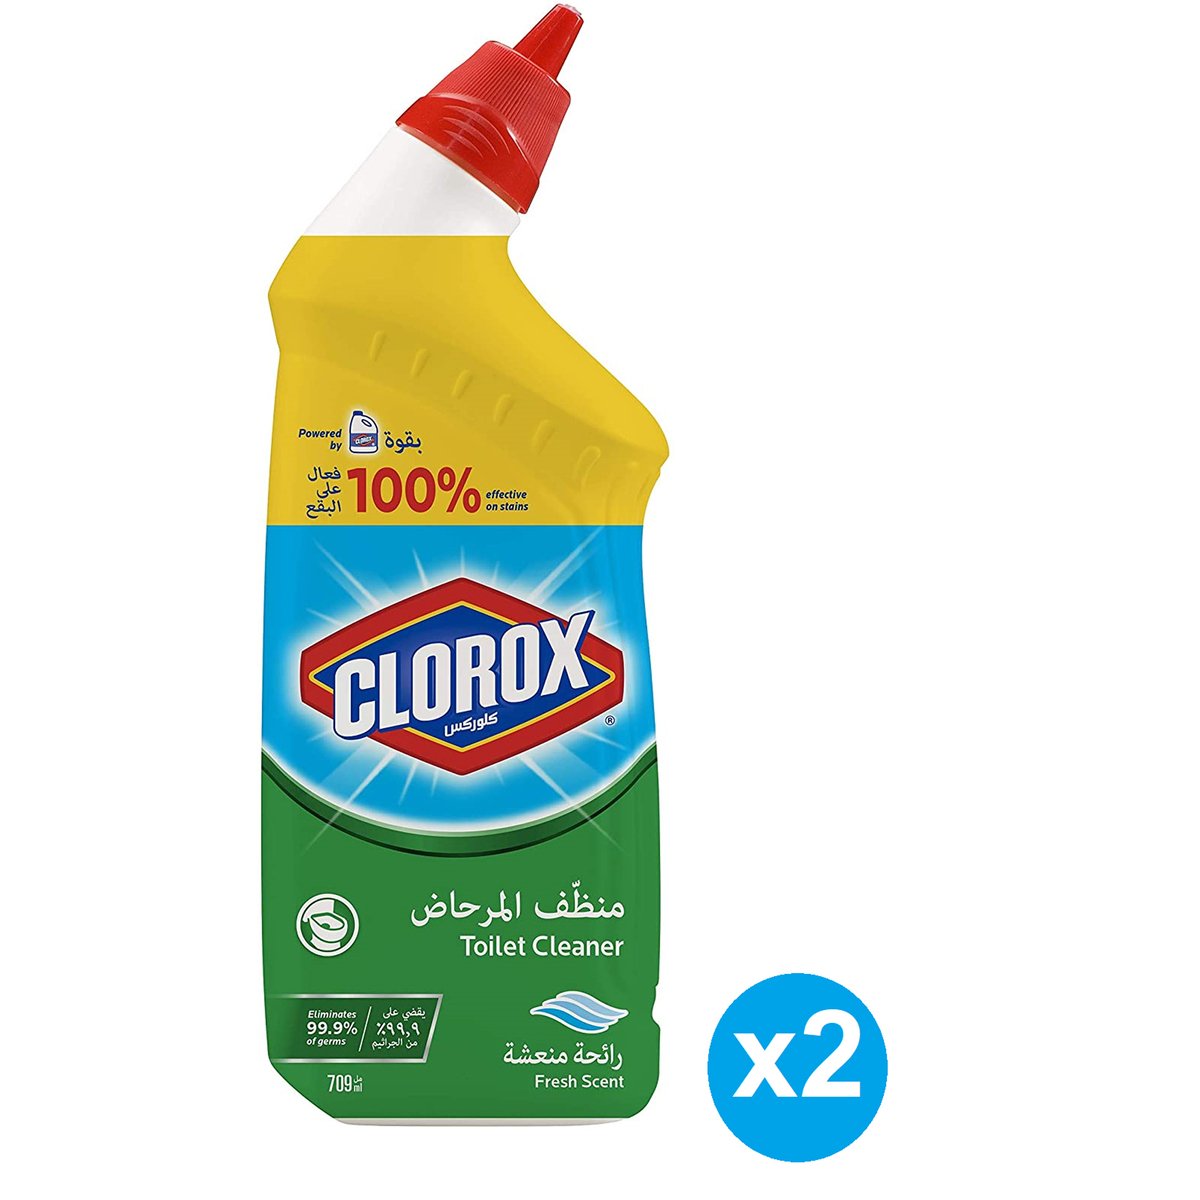 Clorox Toilet Bowl Cleaner Fresh Scent 709ml 1+1